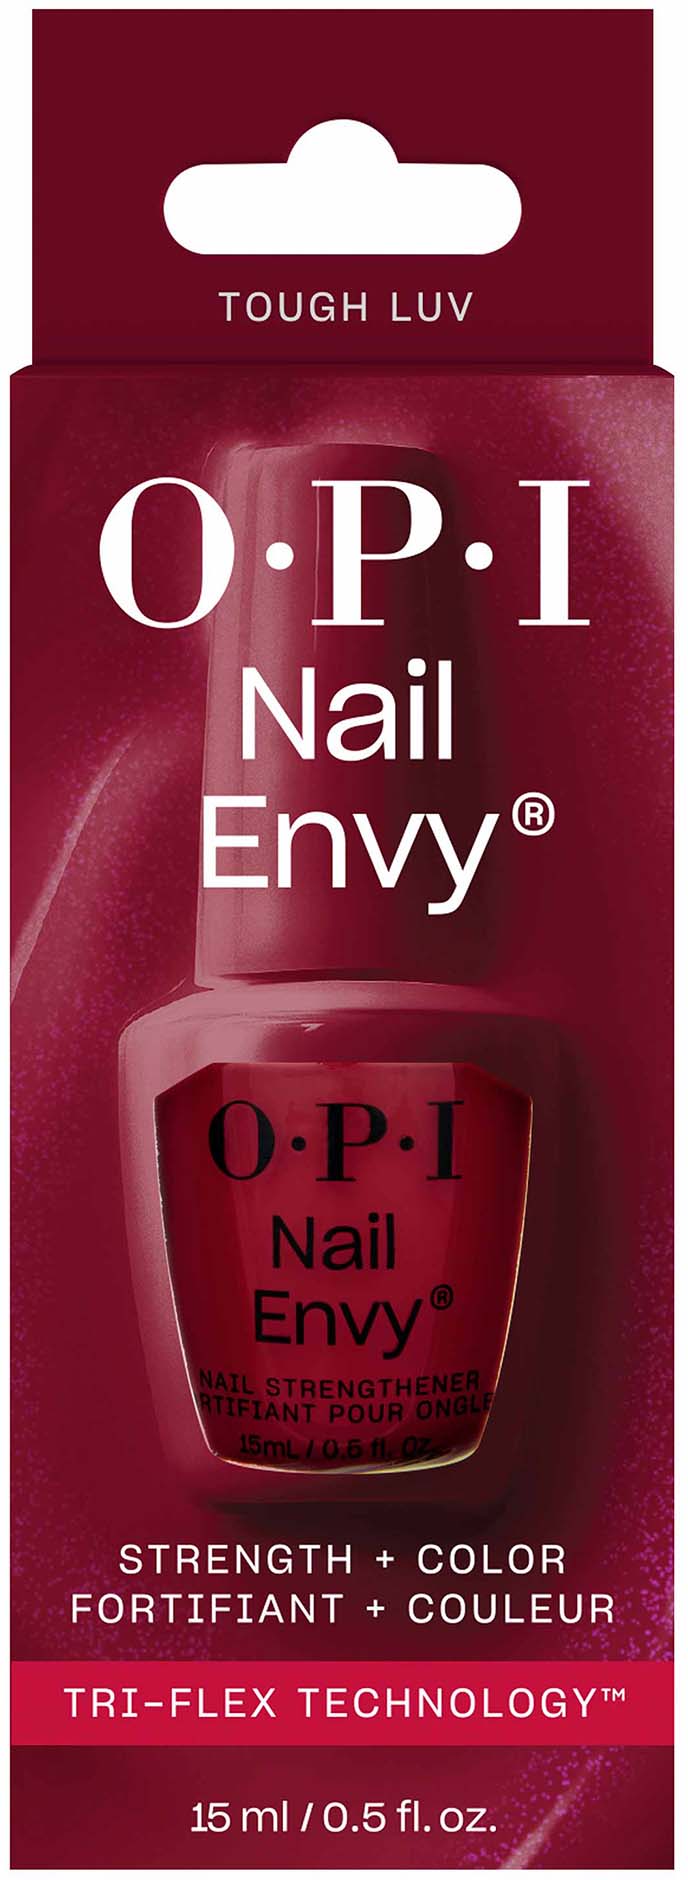 Amazon.com: OPI Nail Envy, 0.5 fl oz and OPI Natural Nail Strengthener :  Beauty & Personal Care